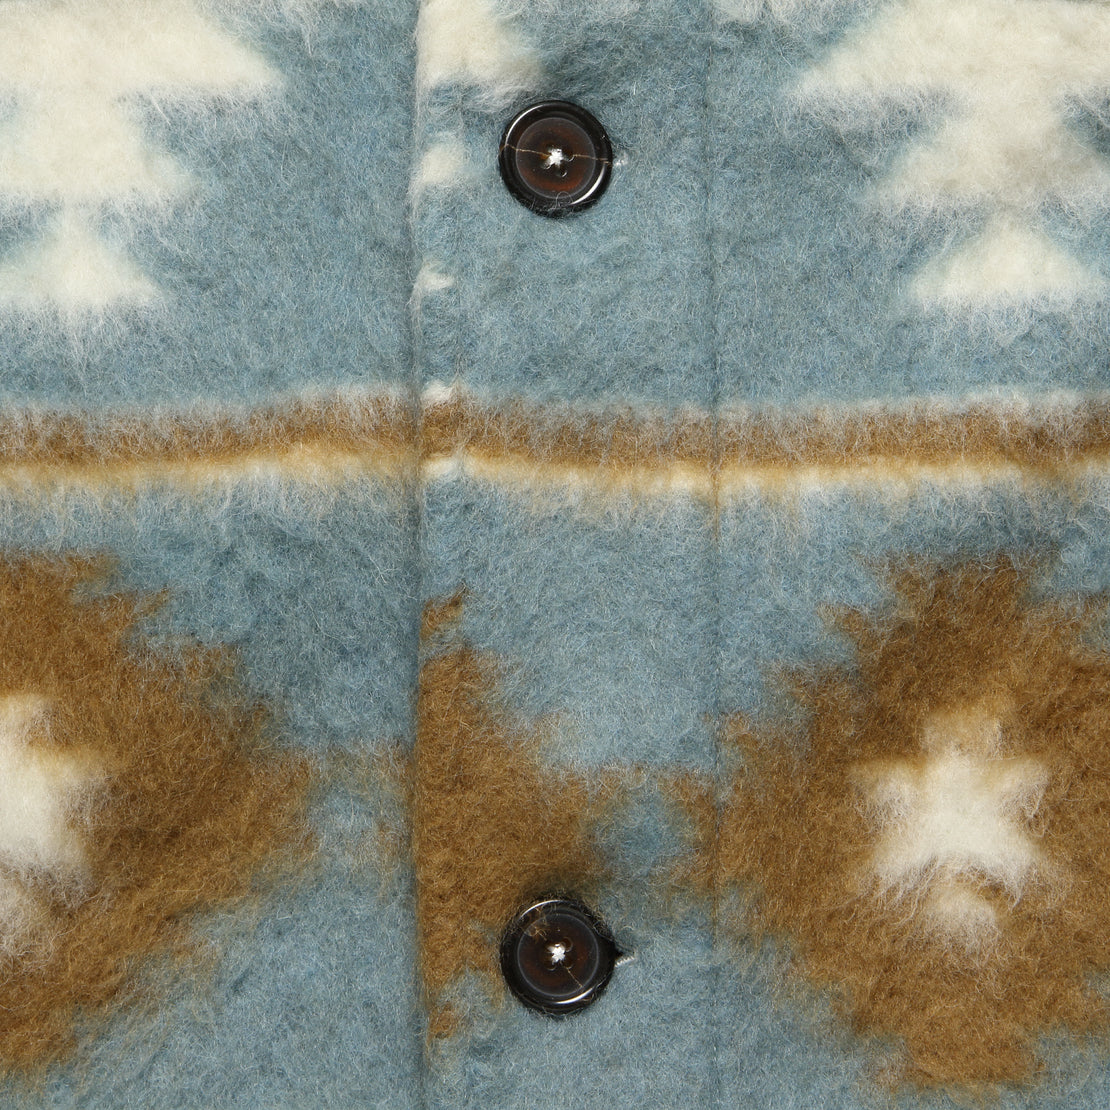 Santa Fe Fleece Lumber Jacket - Sand/Ecru - Universal Works - STAG Provisions - Outerwear - Shirt Jacket